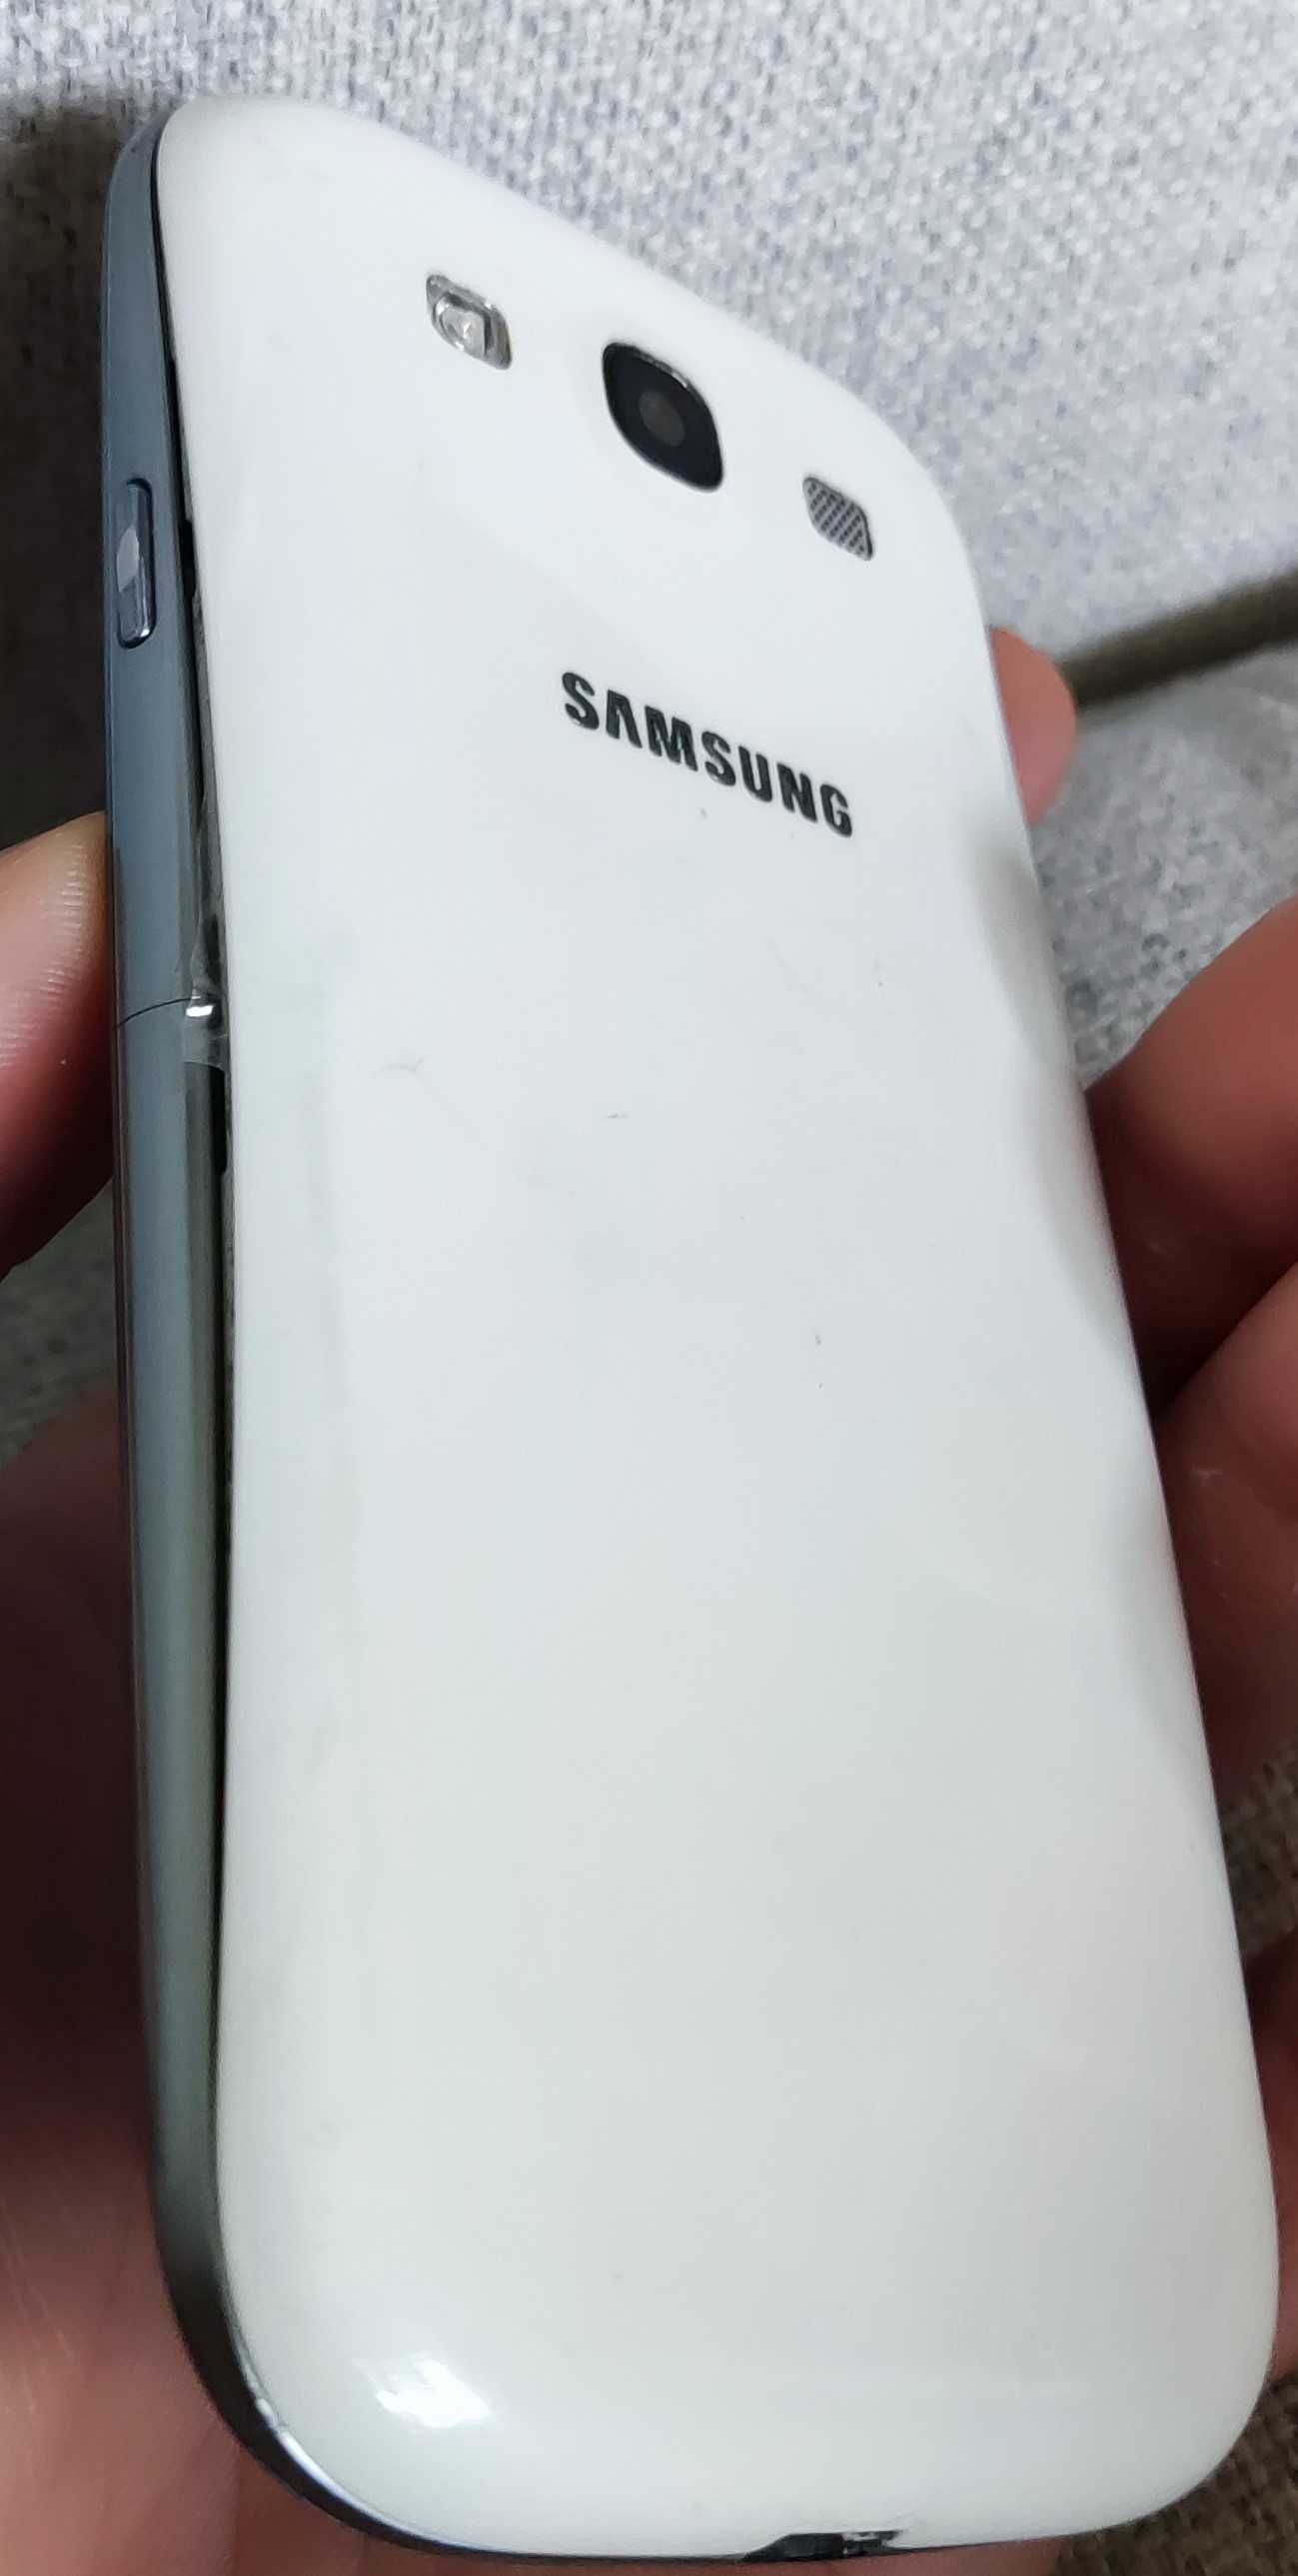 Samsung Galaxy S3 GT-I9300 - Biały + case 3200mAh,  1 GB RAM, 3G, 4.8"